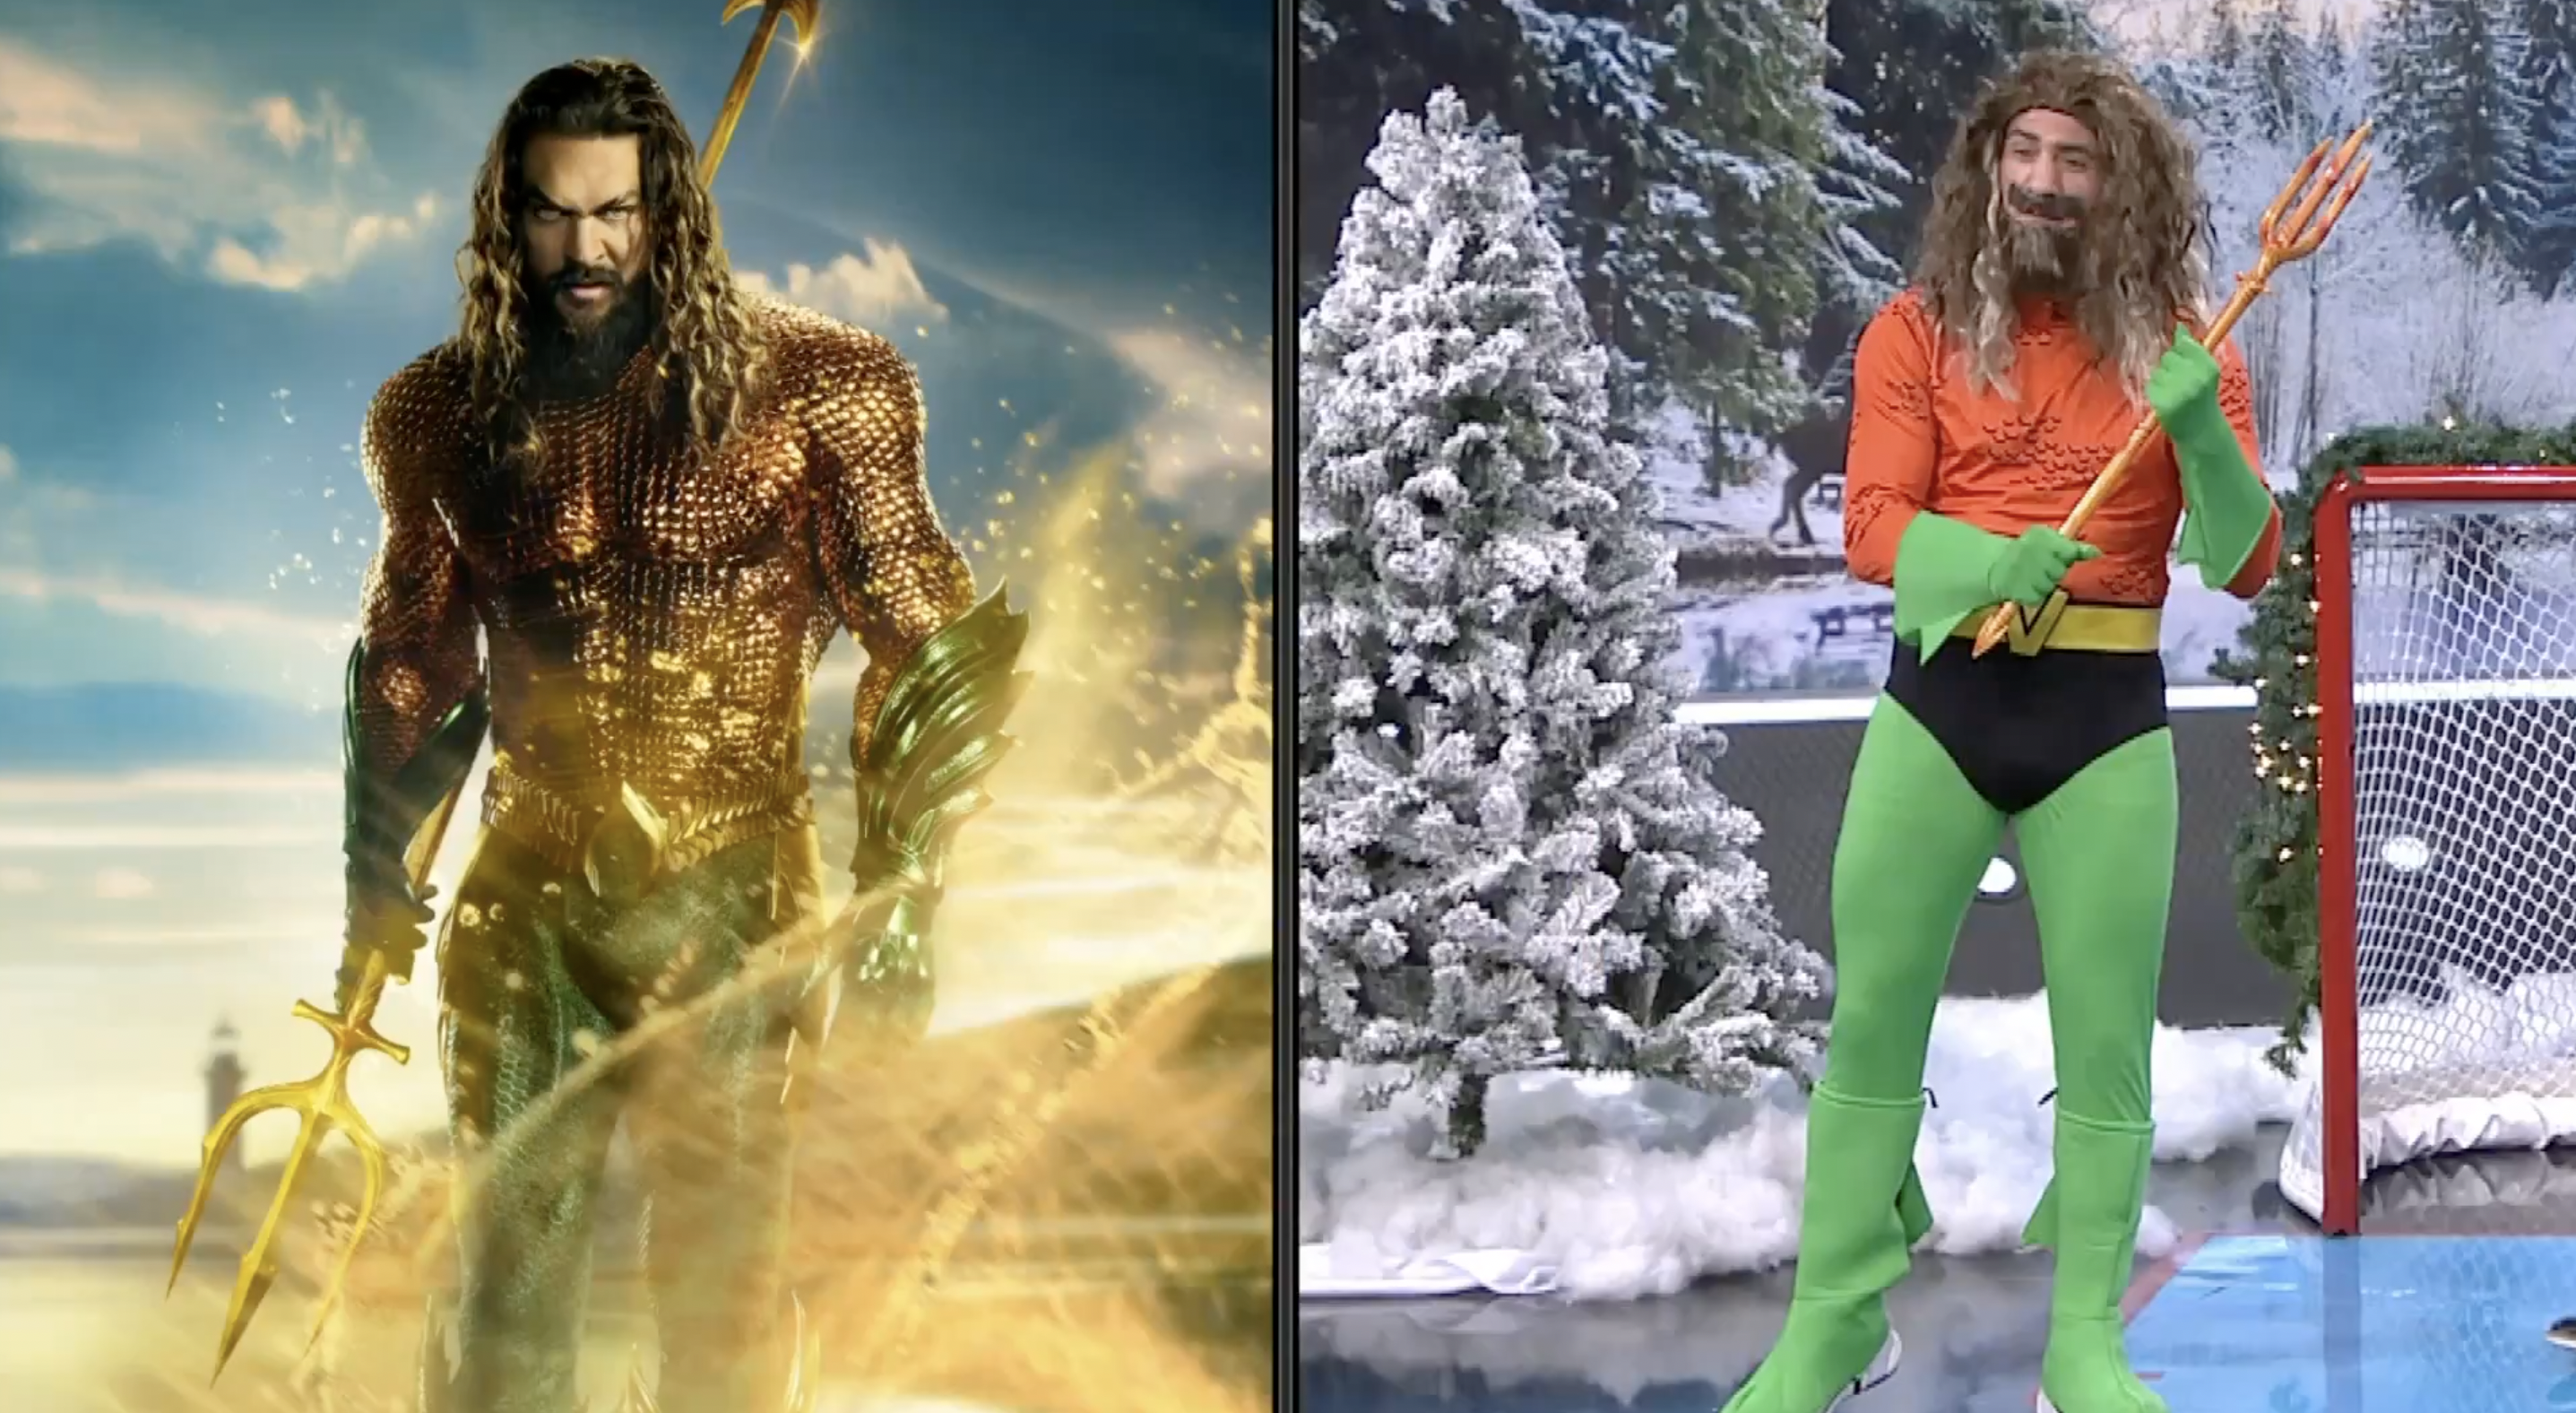 Paul Bissonnette dons Aquaman costume for hilarious segment